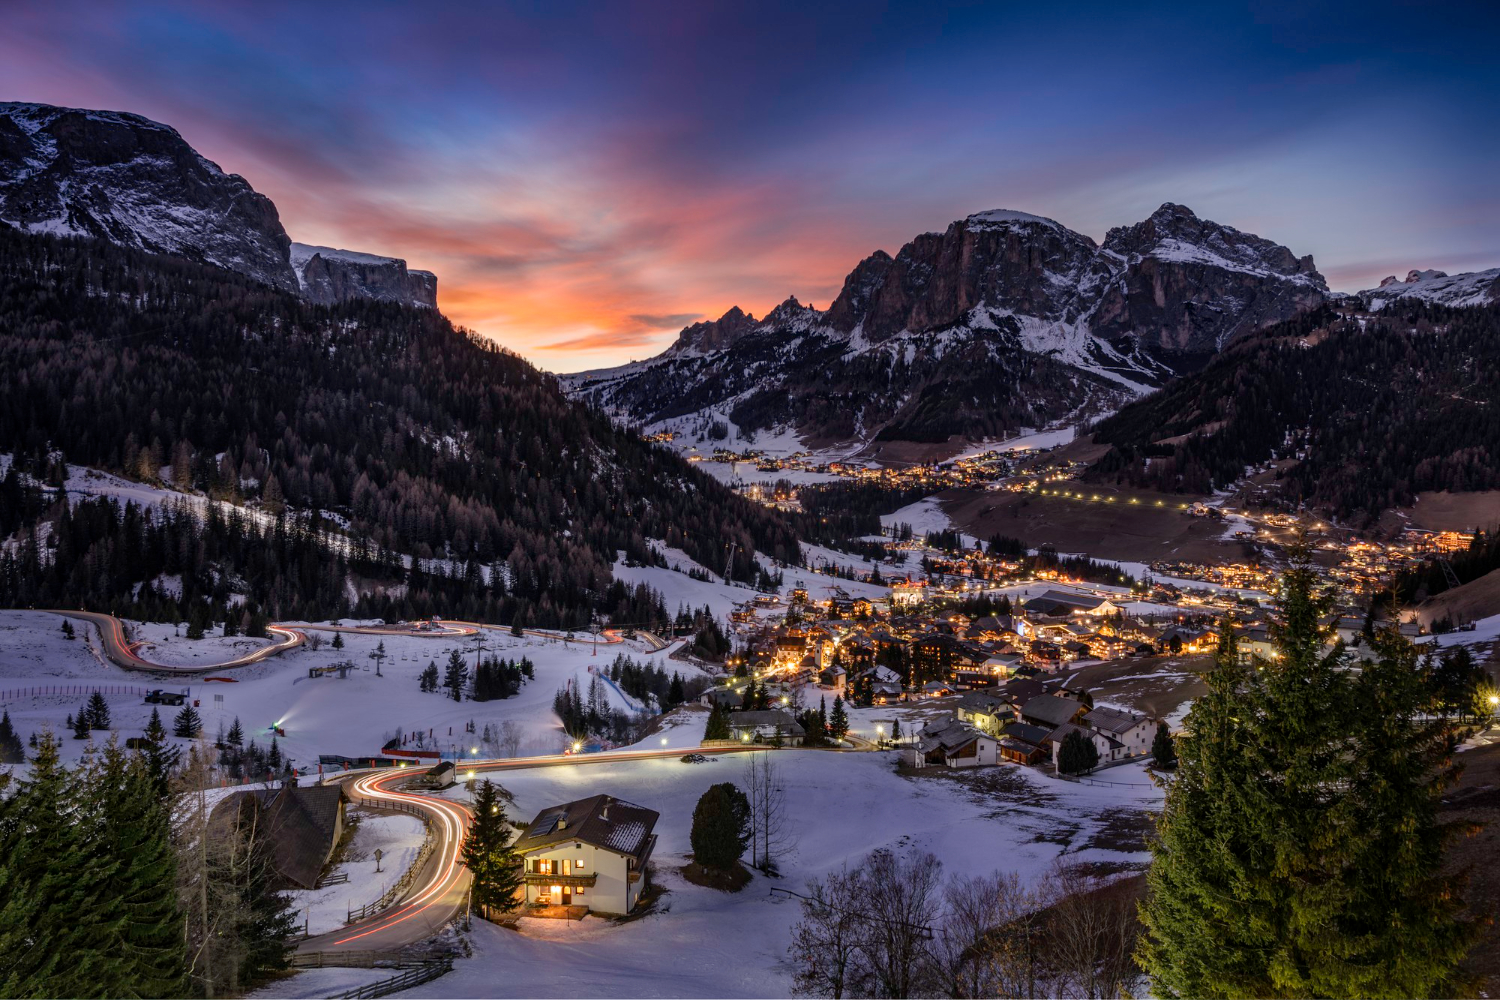 Switzerlands Alpine regions